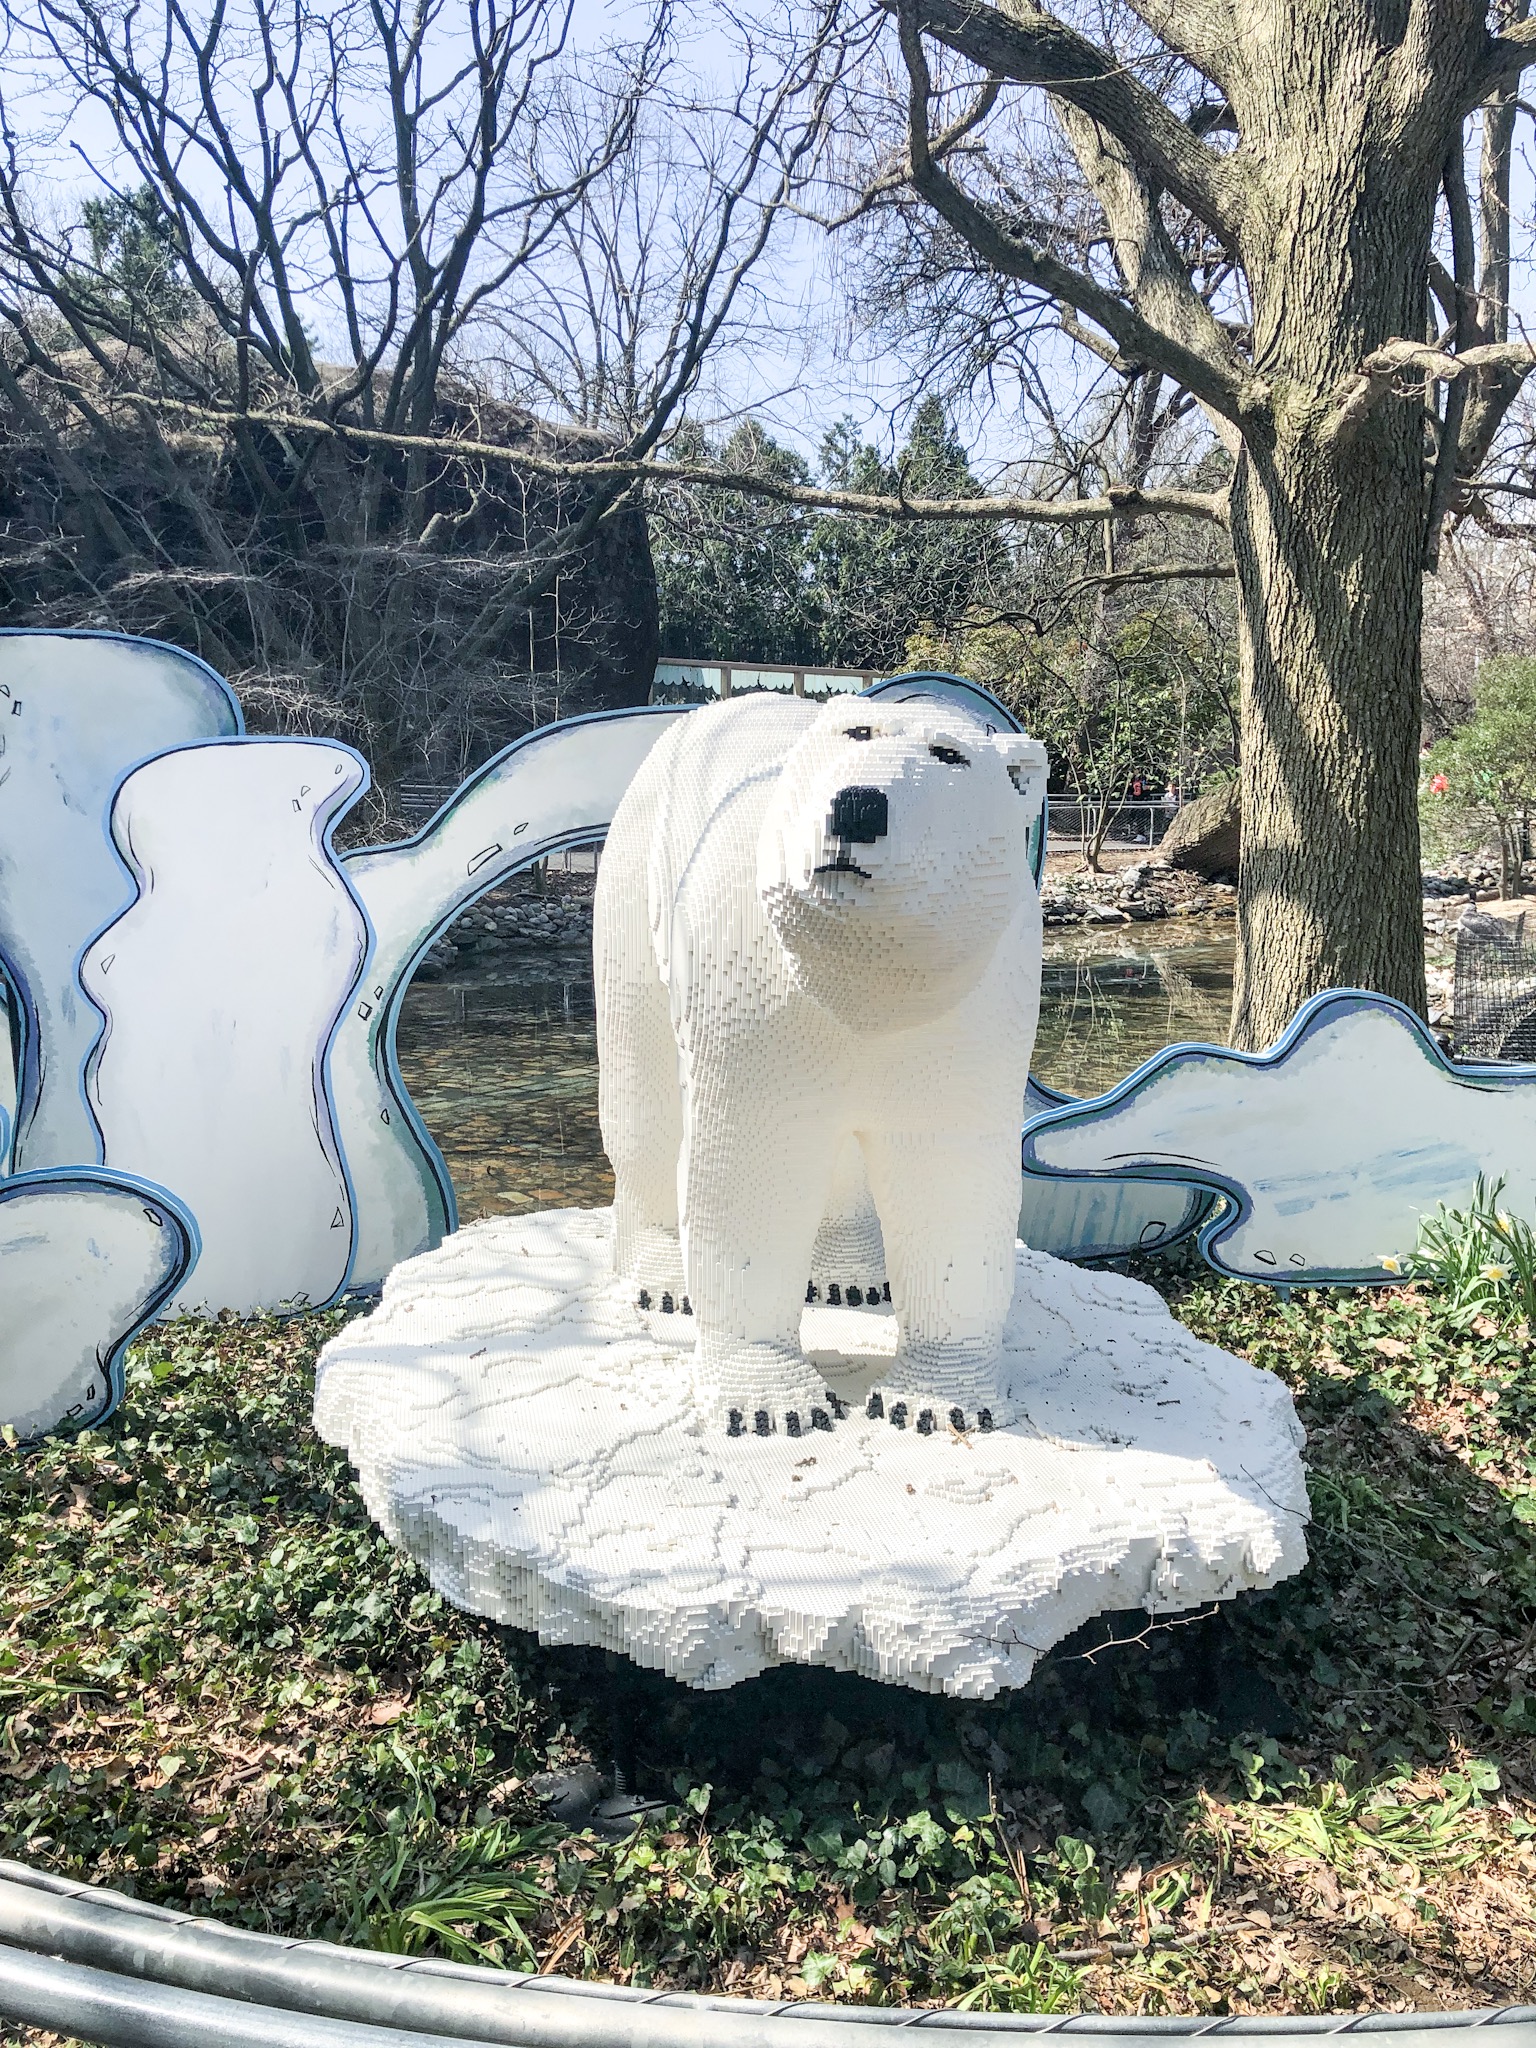 Lego Polar bear at Philadelphia Zoo and Zoo books for kids